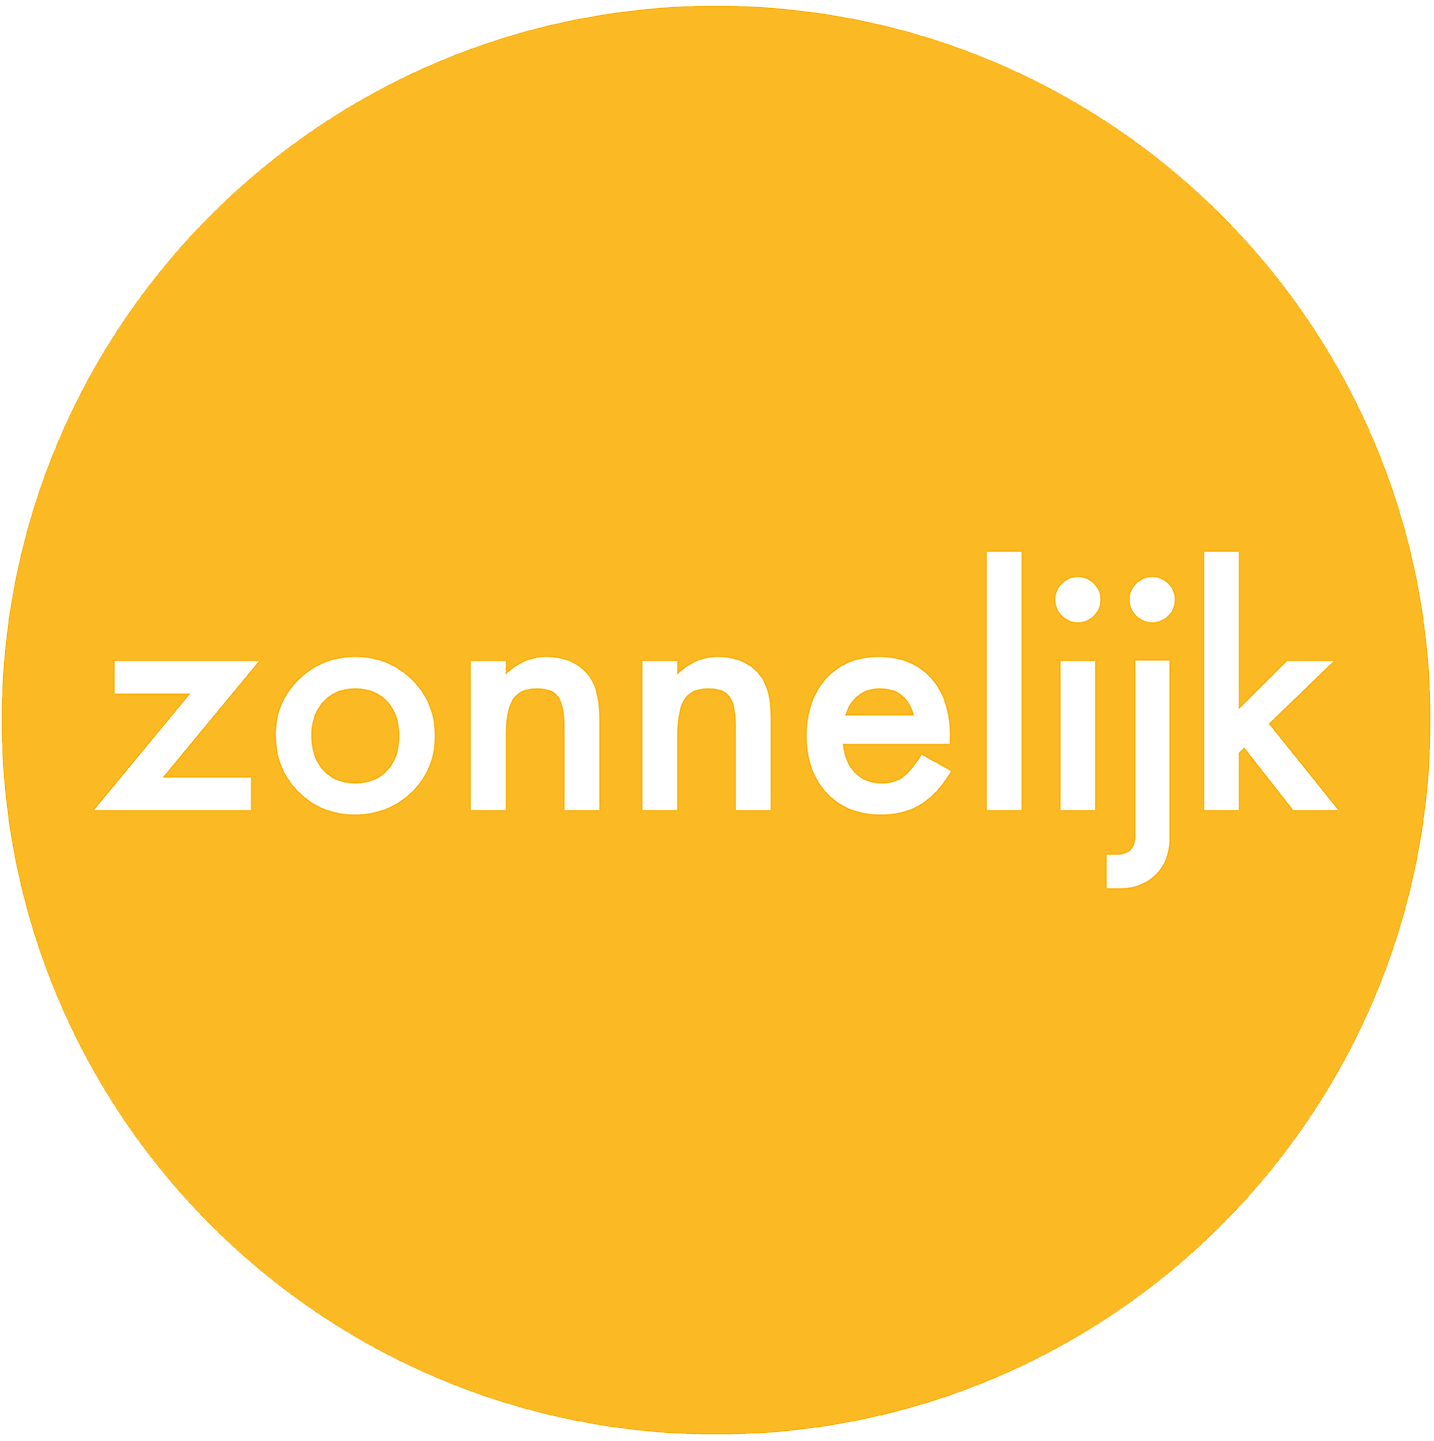 Zonnelijk logo: white text in a sunny yellow circle.